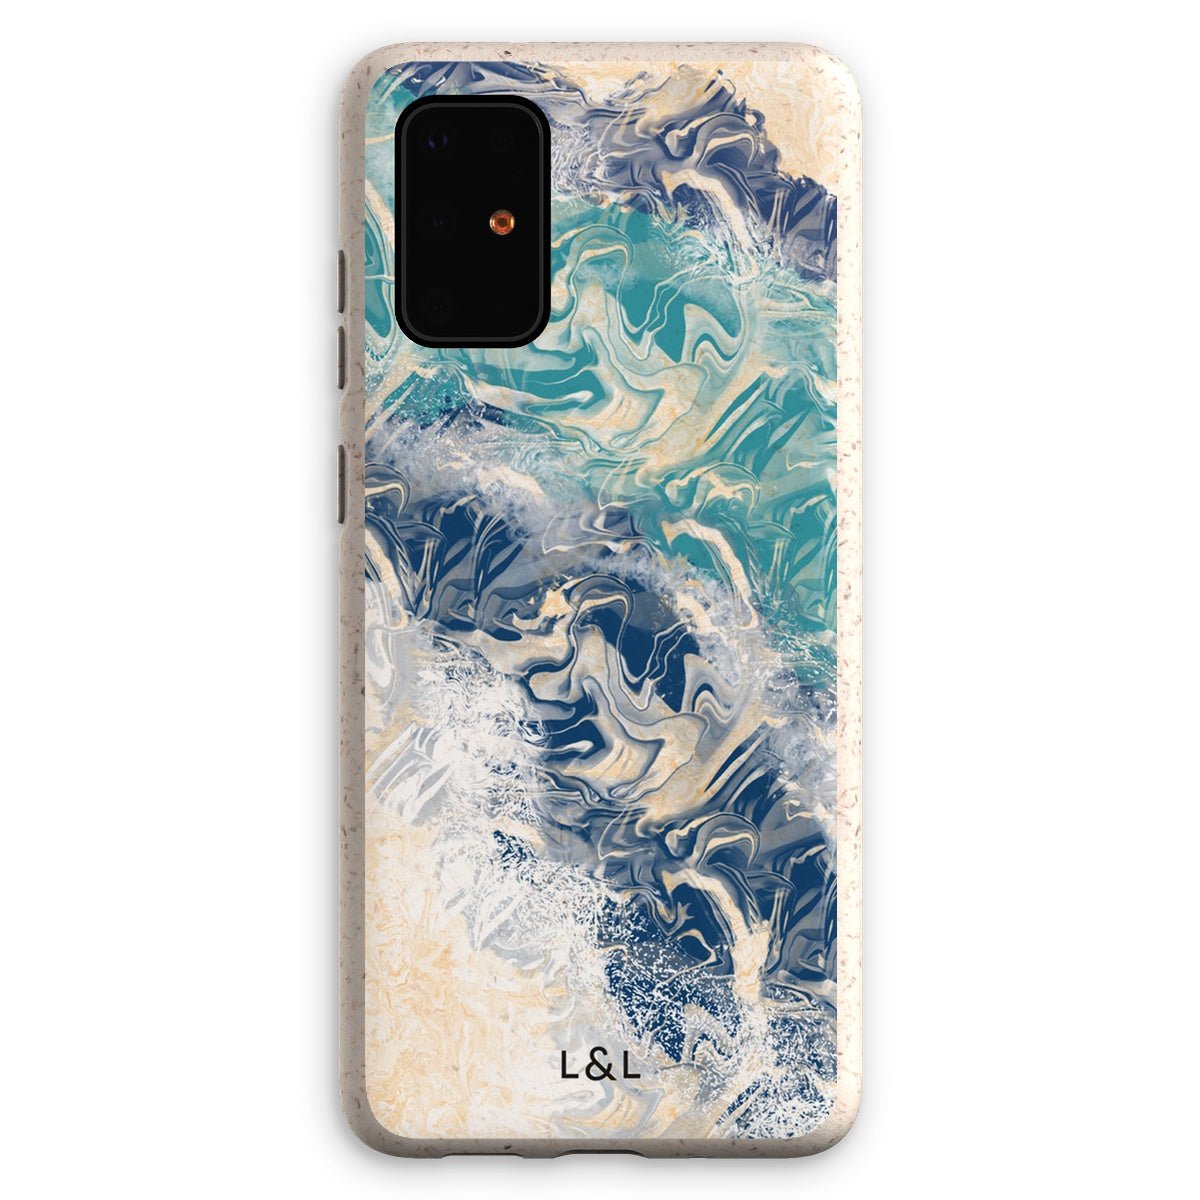 Wave Eco Phone Case - Loam & Lore